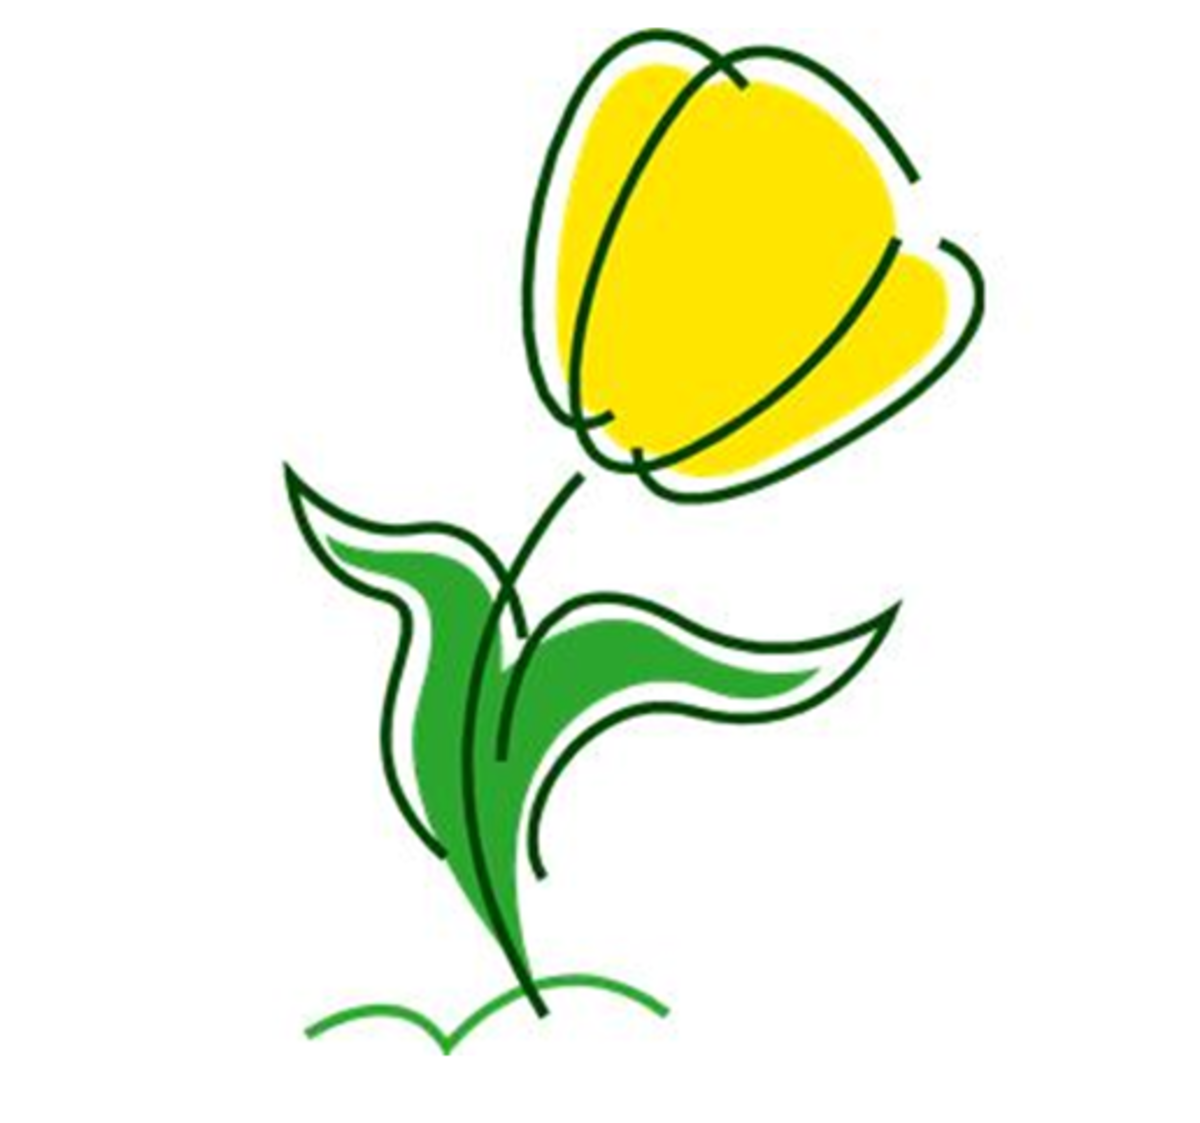 Yellow Tulip Clip Art